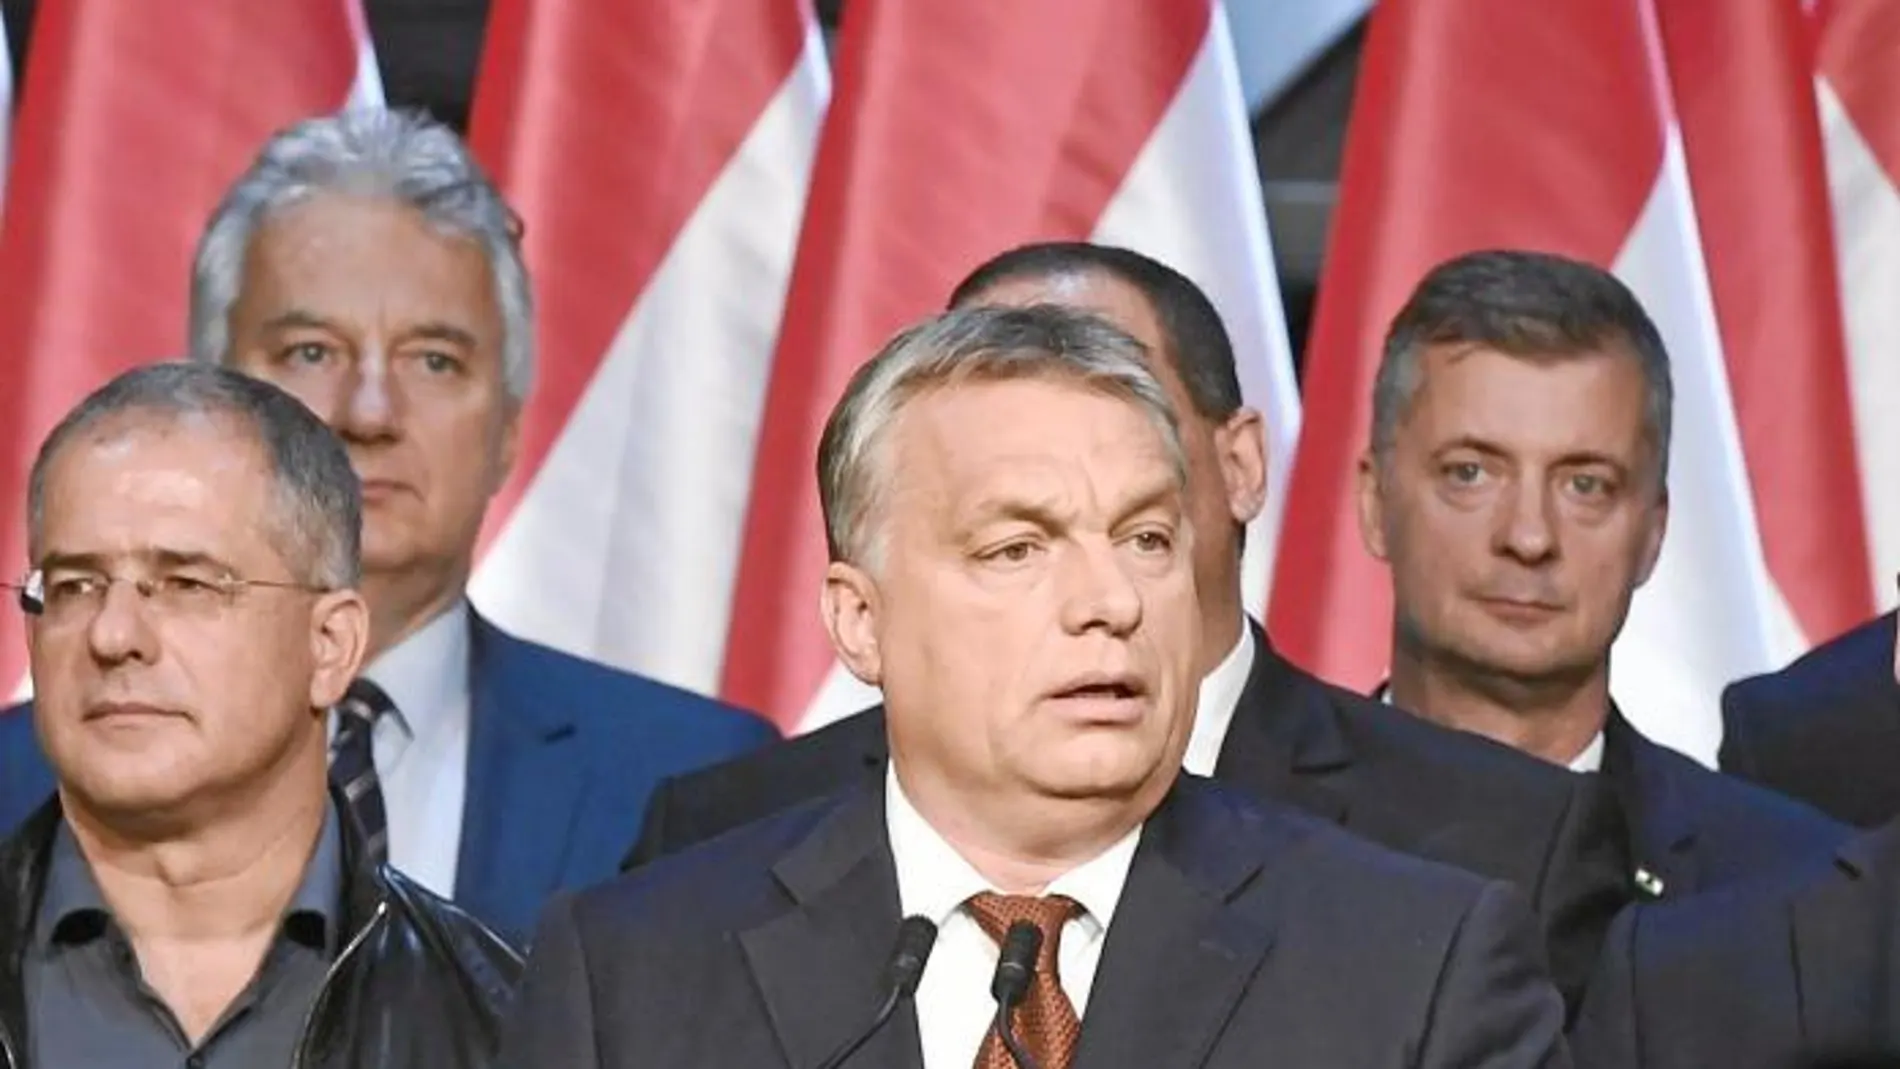 El primer ministro húngaro, Viktor Orban, compareció tras la consulta